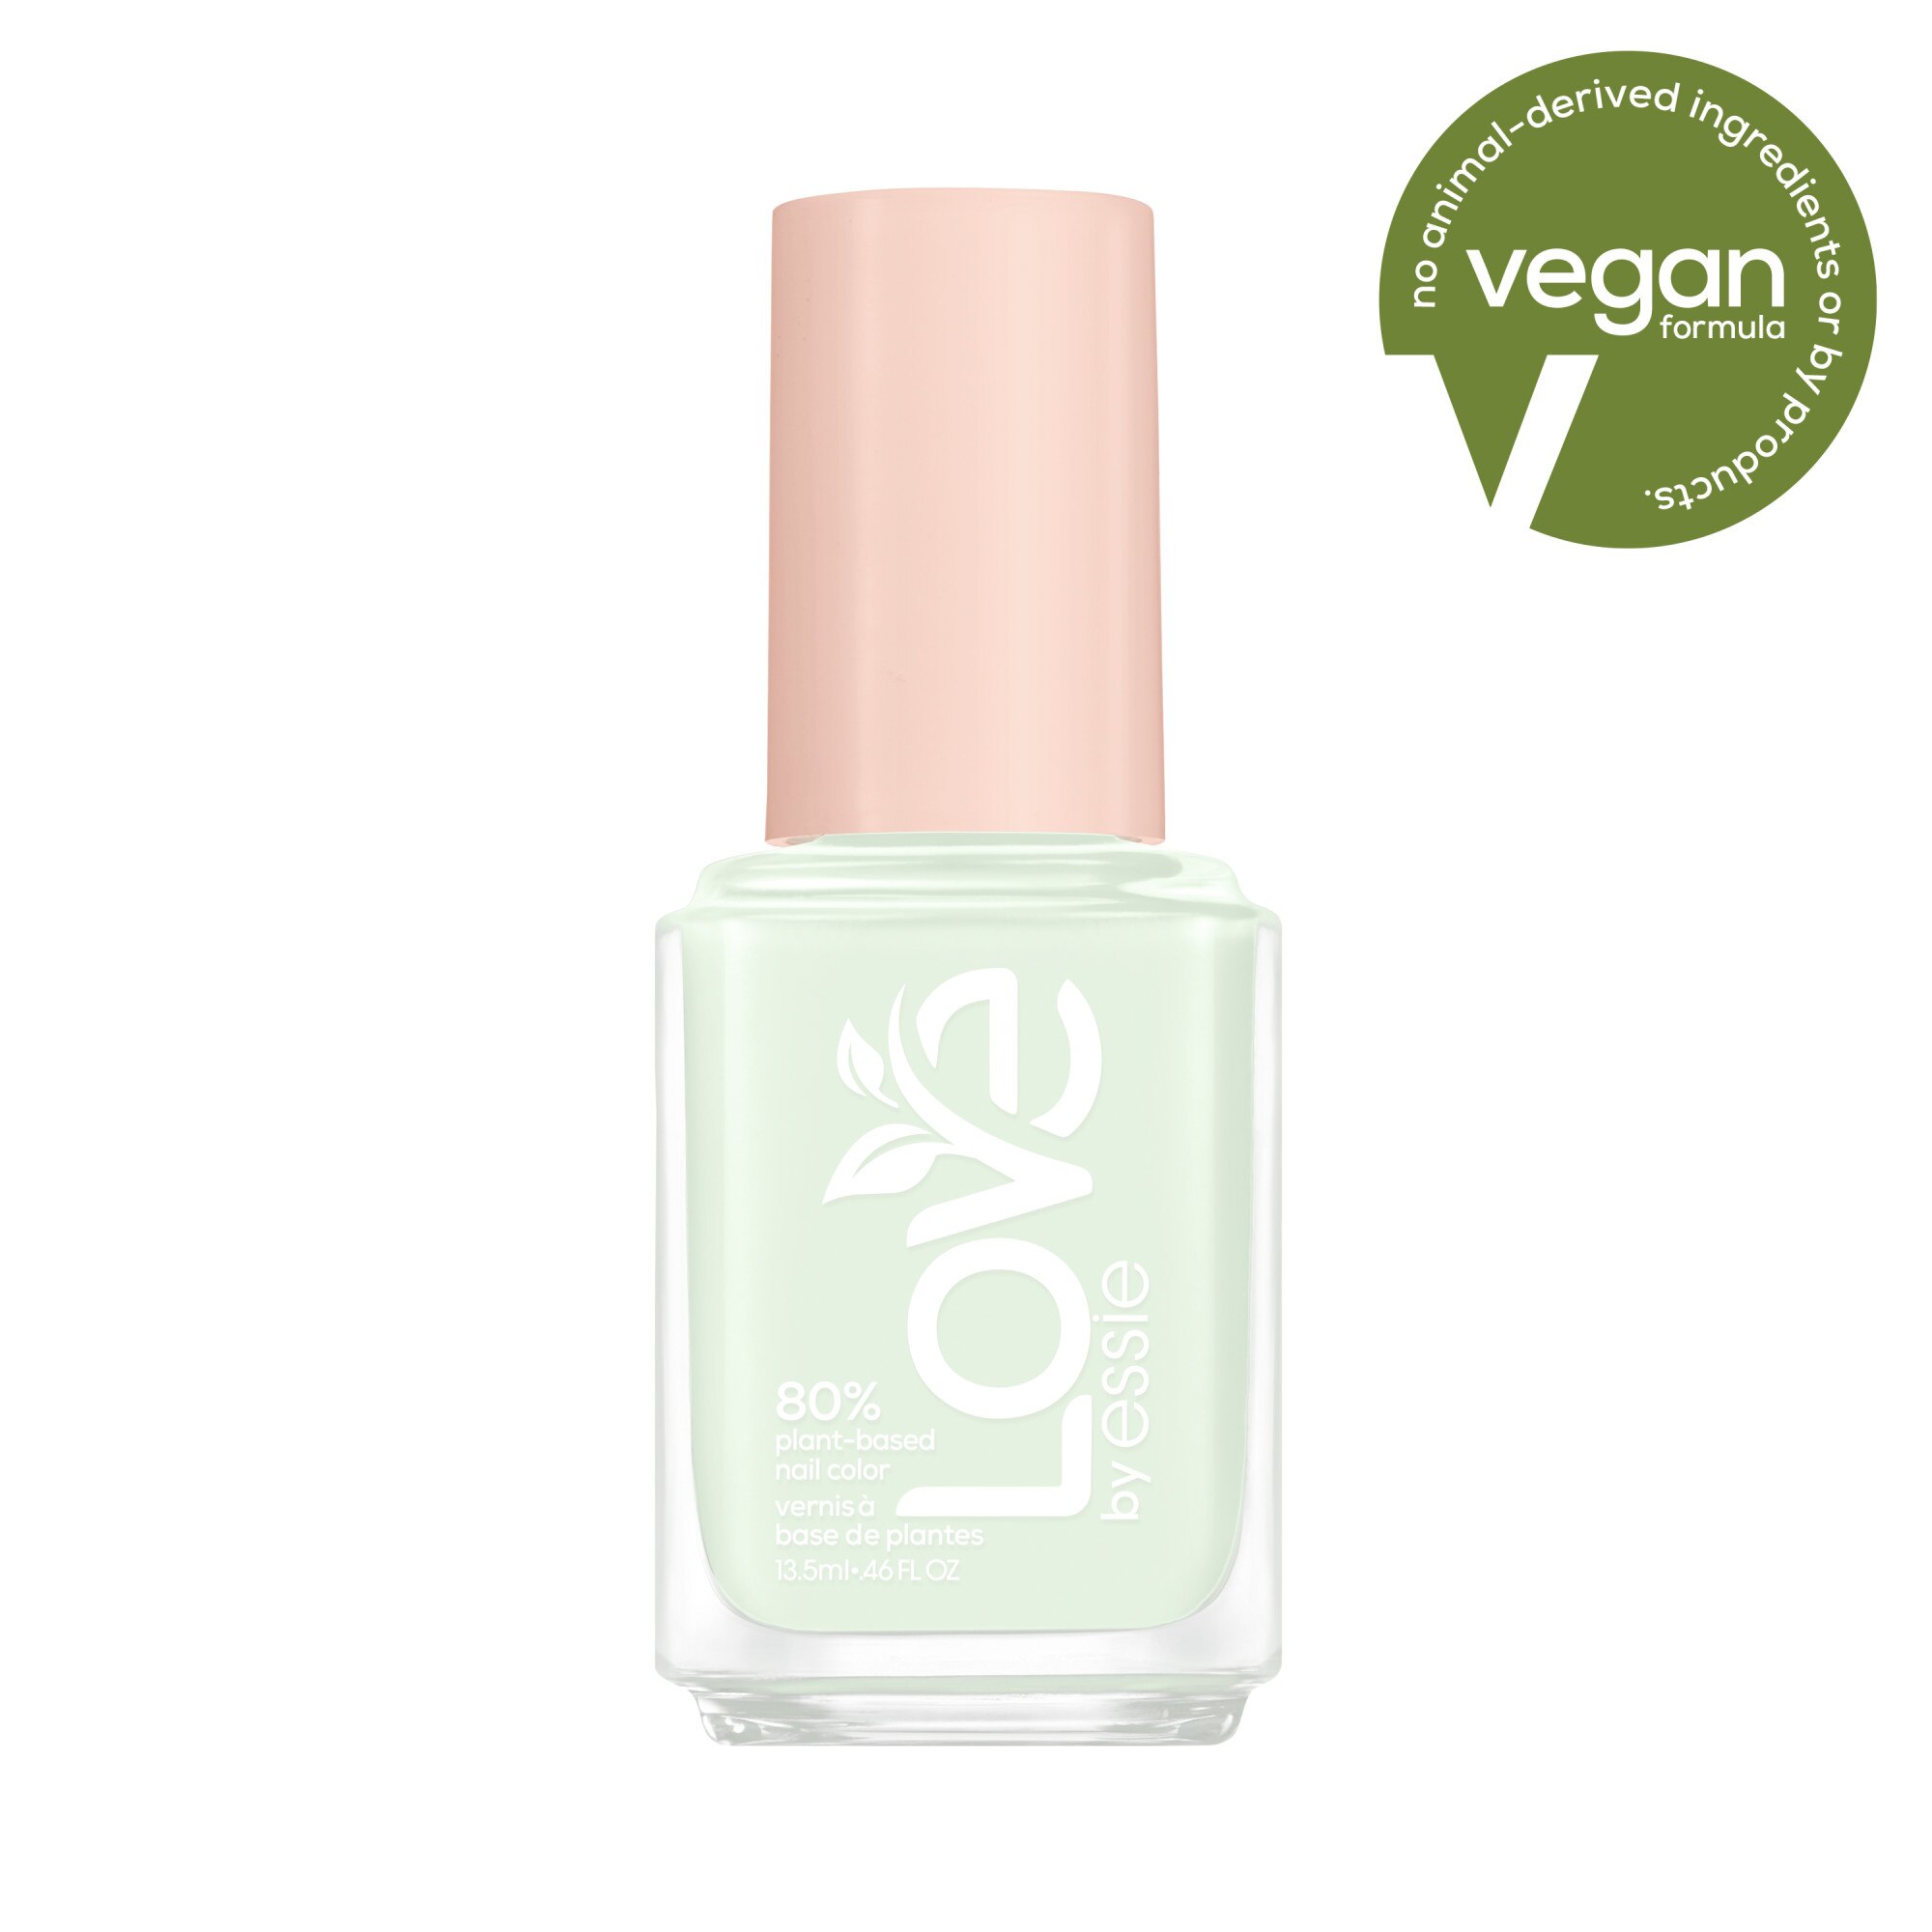 love by essie 80 Percent Plant-Based Nail Polish, Vegan, get it girl (pink), 0.46 fl oz